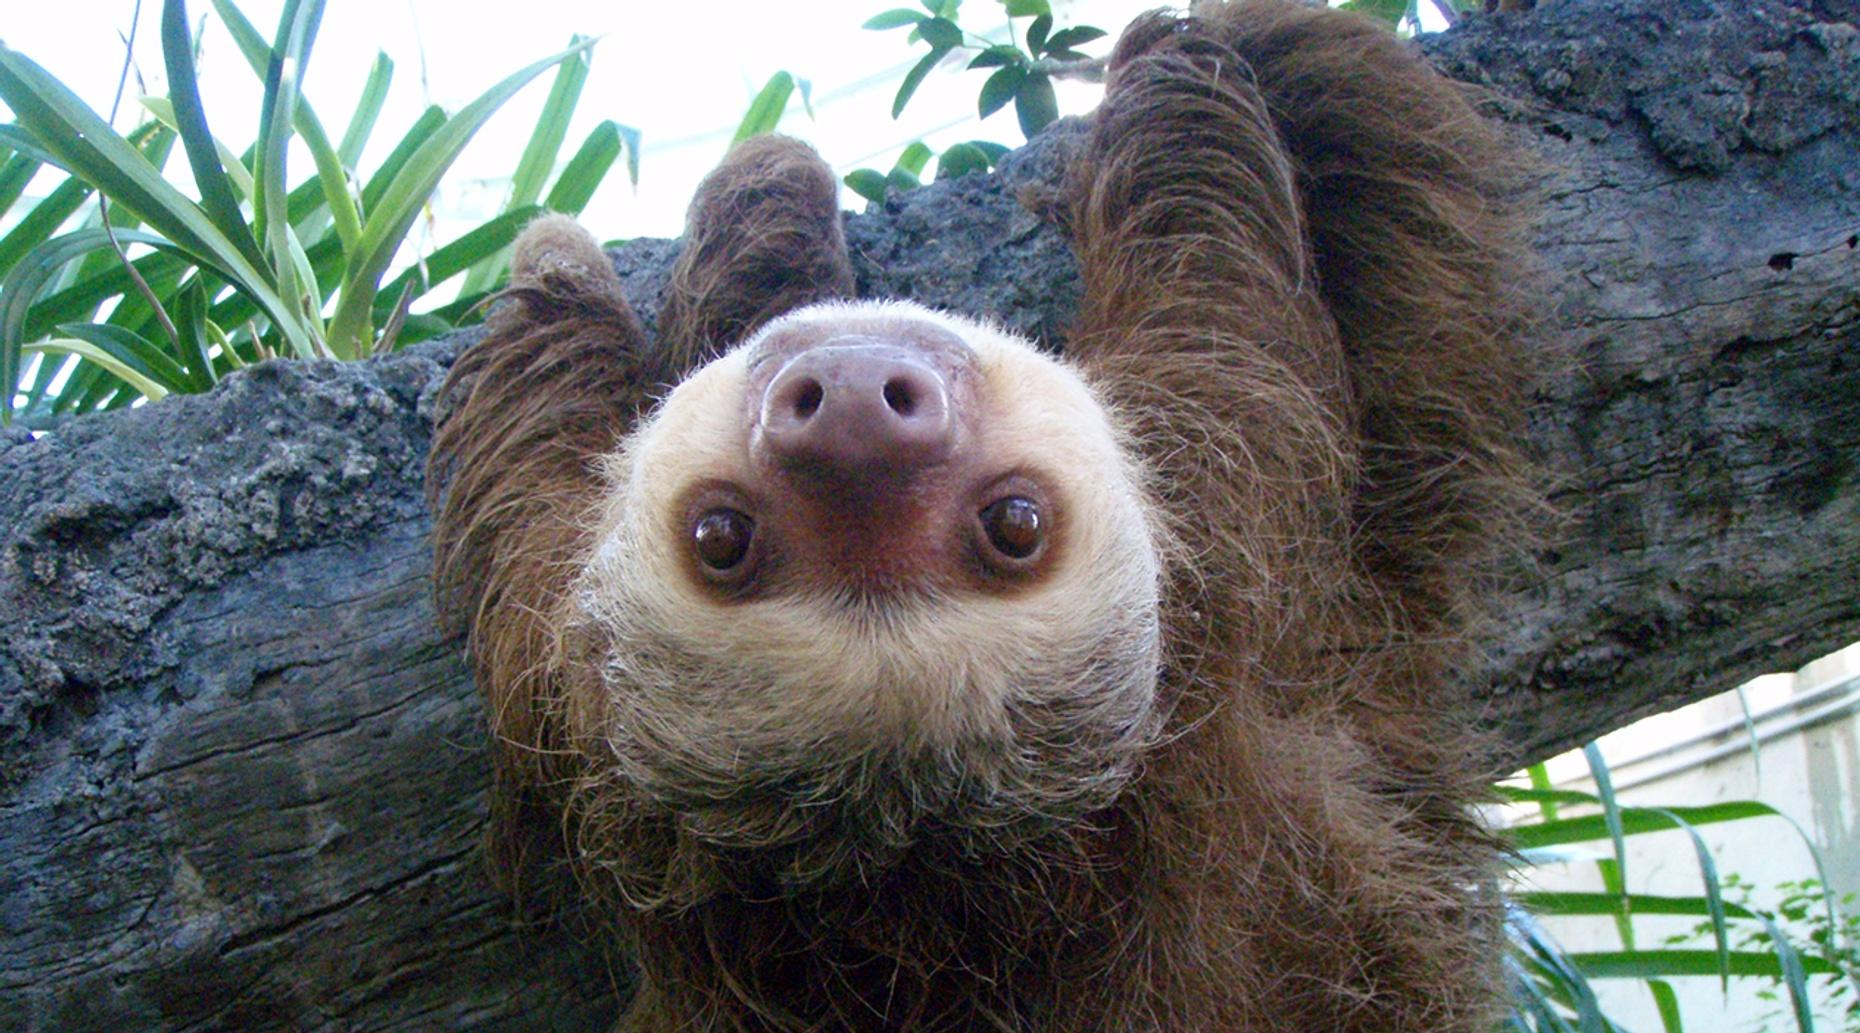 Kenansville Sloth Encounter